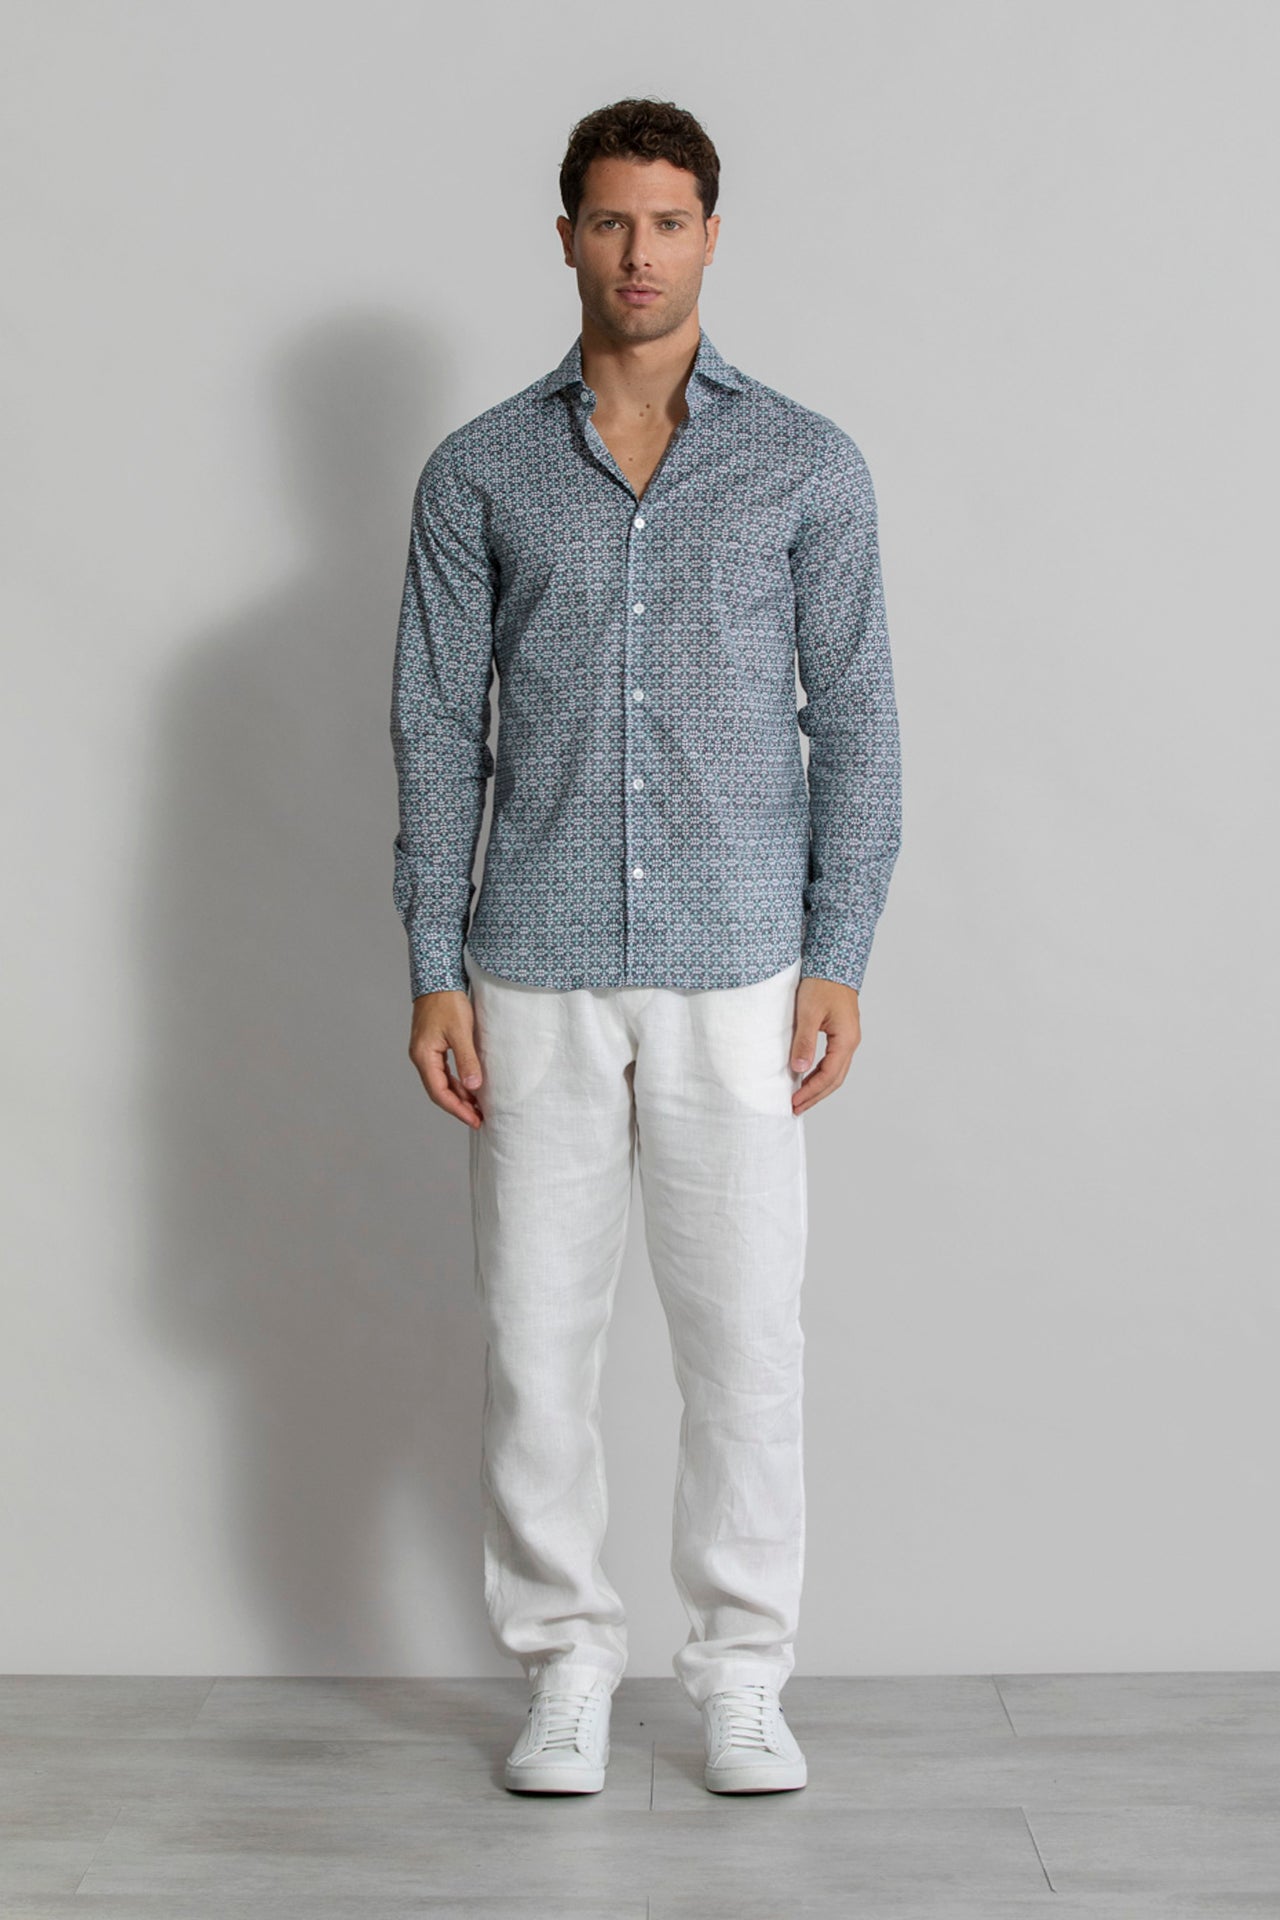 Sean stretch cotton voile printed shirt - naj pattern